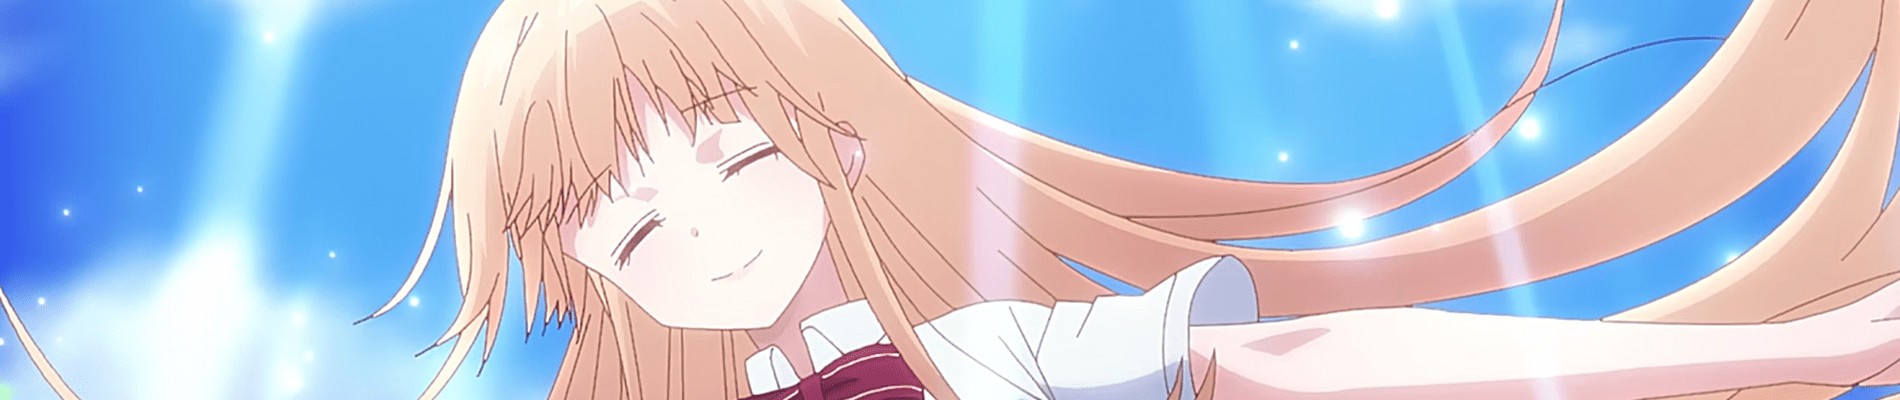 10 Anime Like The Angel Next Door Spoils Me Rotten